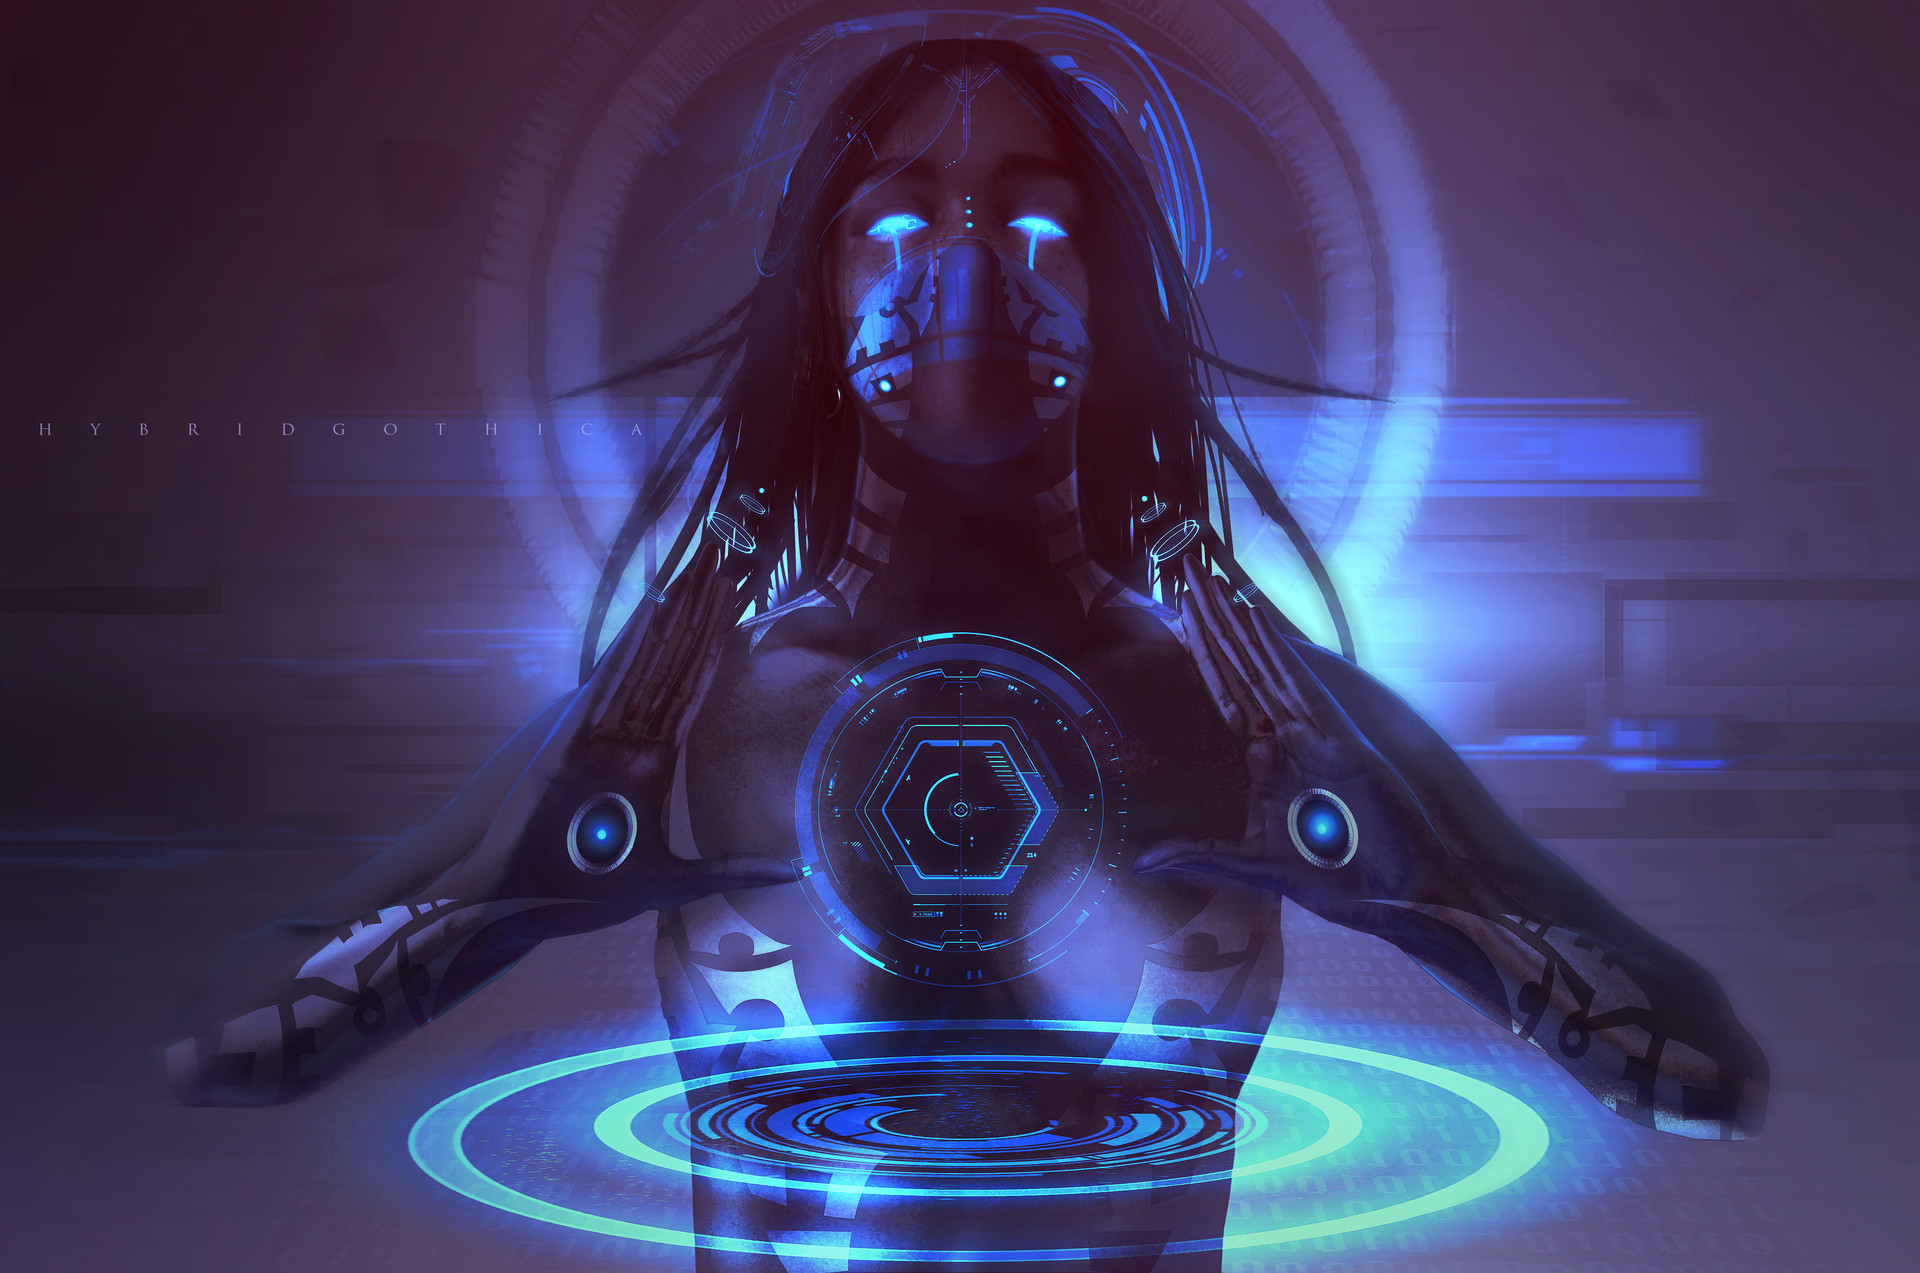 Девушка киборг Sci Fi. Киберпанк нейрофанк. Cyberpunk Sci-Fi киборги. Cyberpunk 2077 киборги арт.